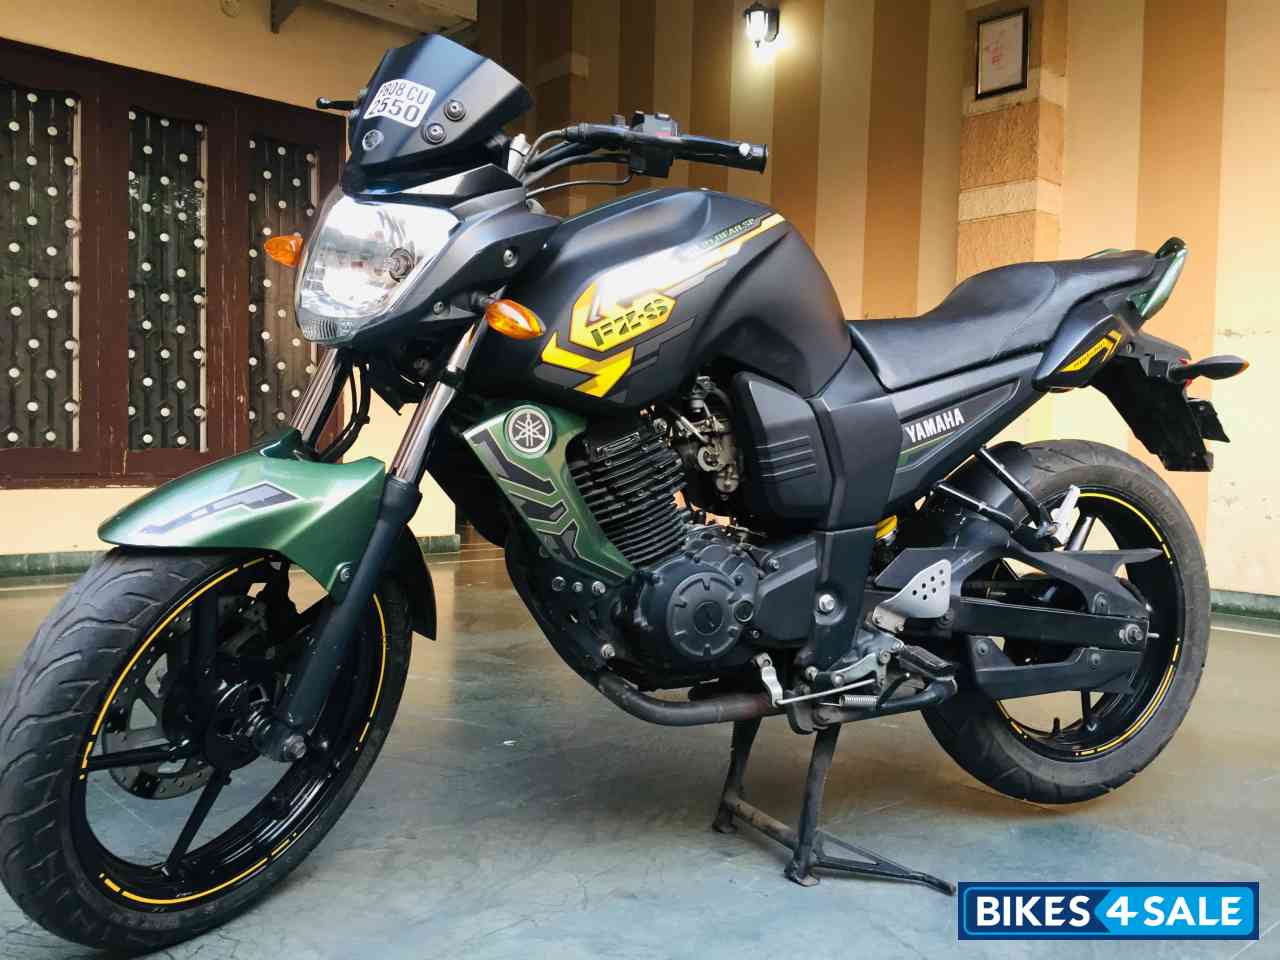 Used 2014 model Yamaha FZ-S for sale in Jalandhar. ID 272611 - Bikes4Sale